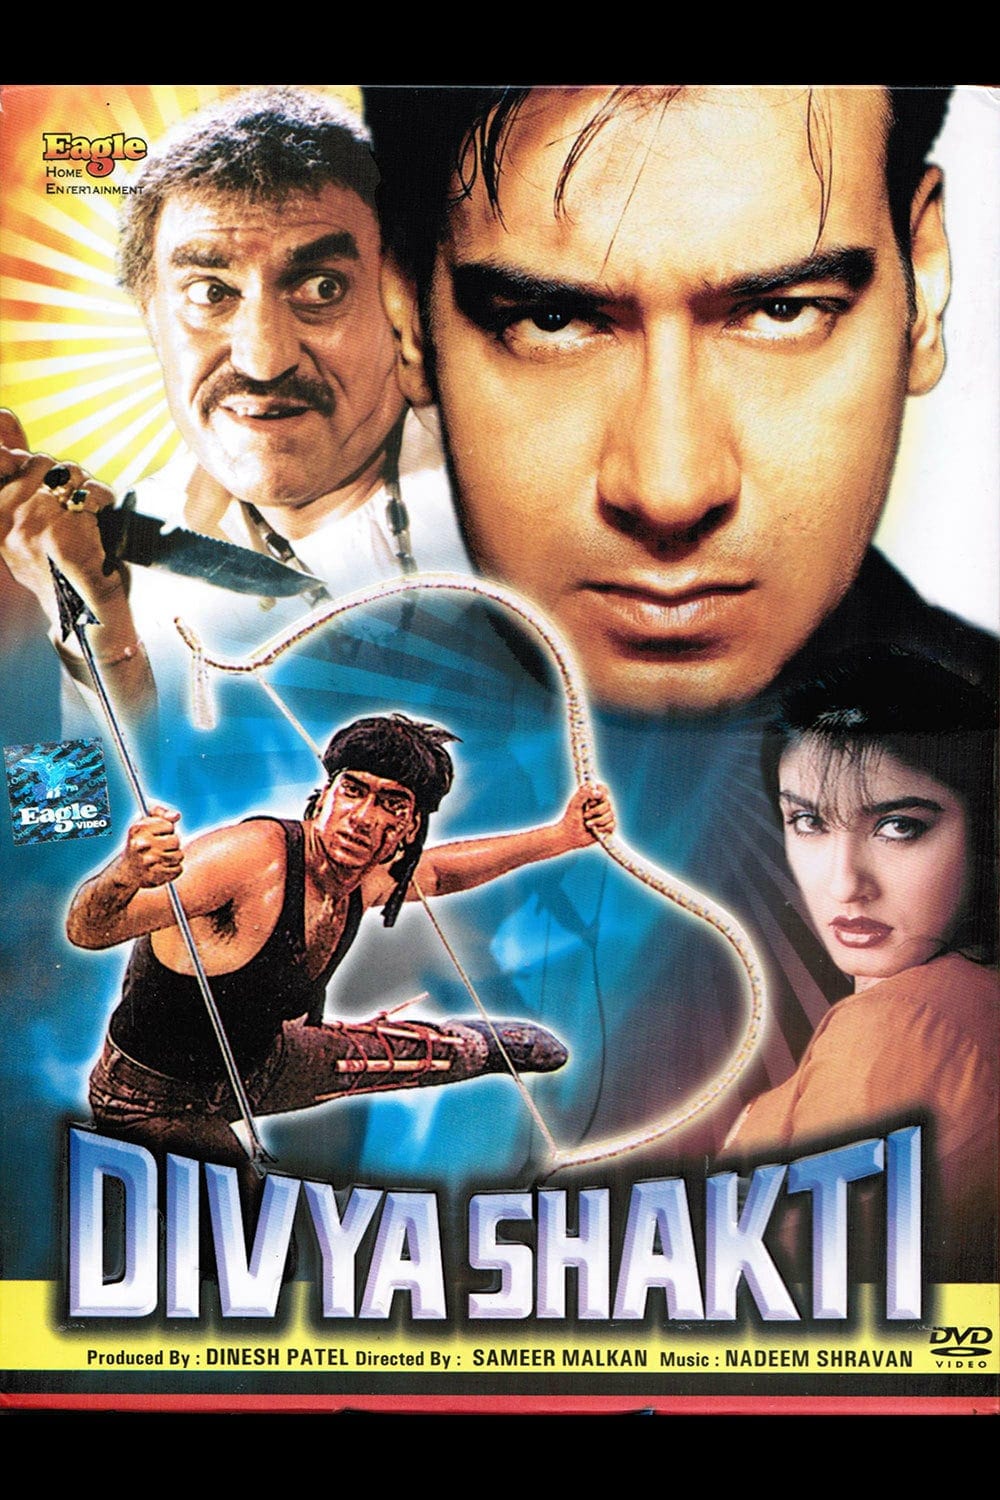 Poster for the movie "Divya Shakti"